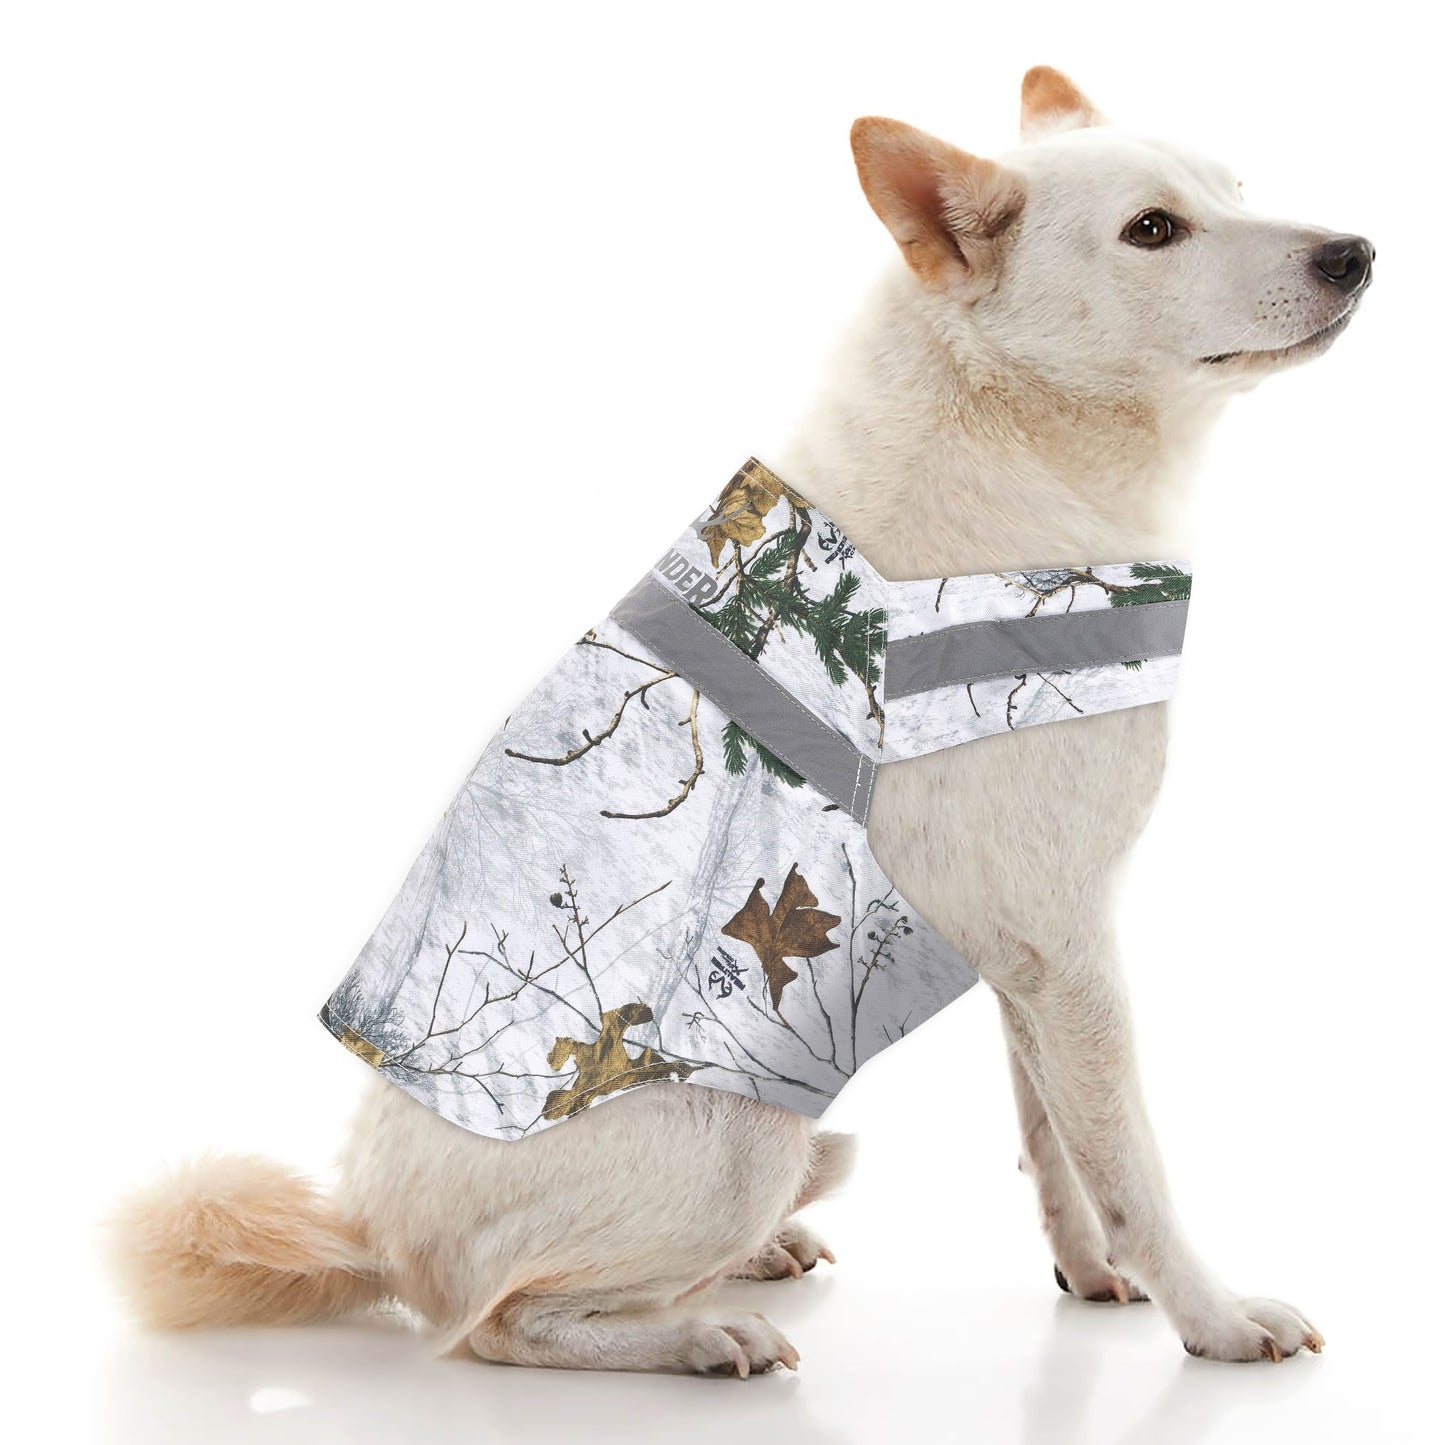 Mooselander - Dog Safety Vest with Reflective Tape in Realtree Prints Xtra Bright Orange Mini